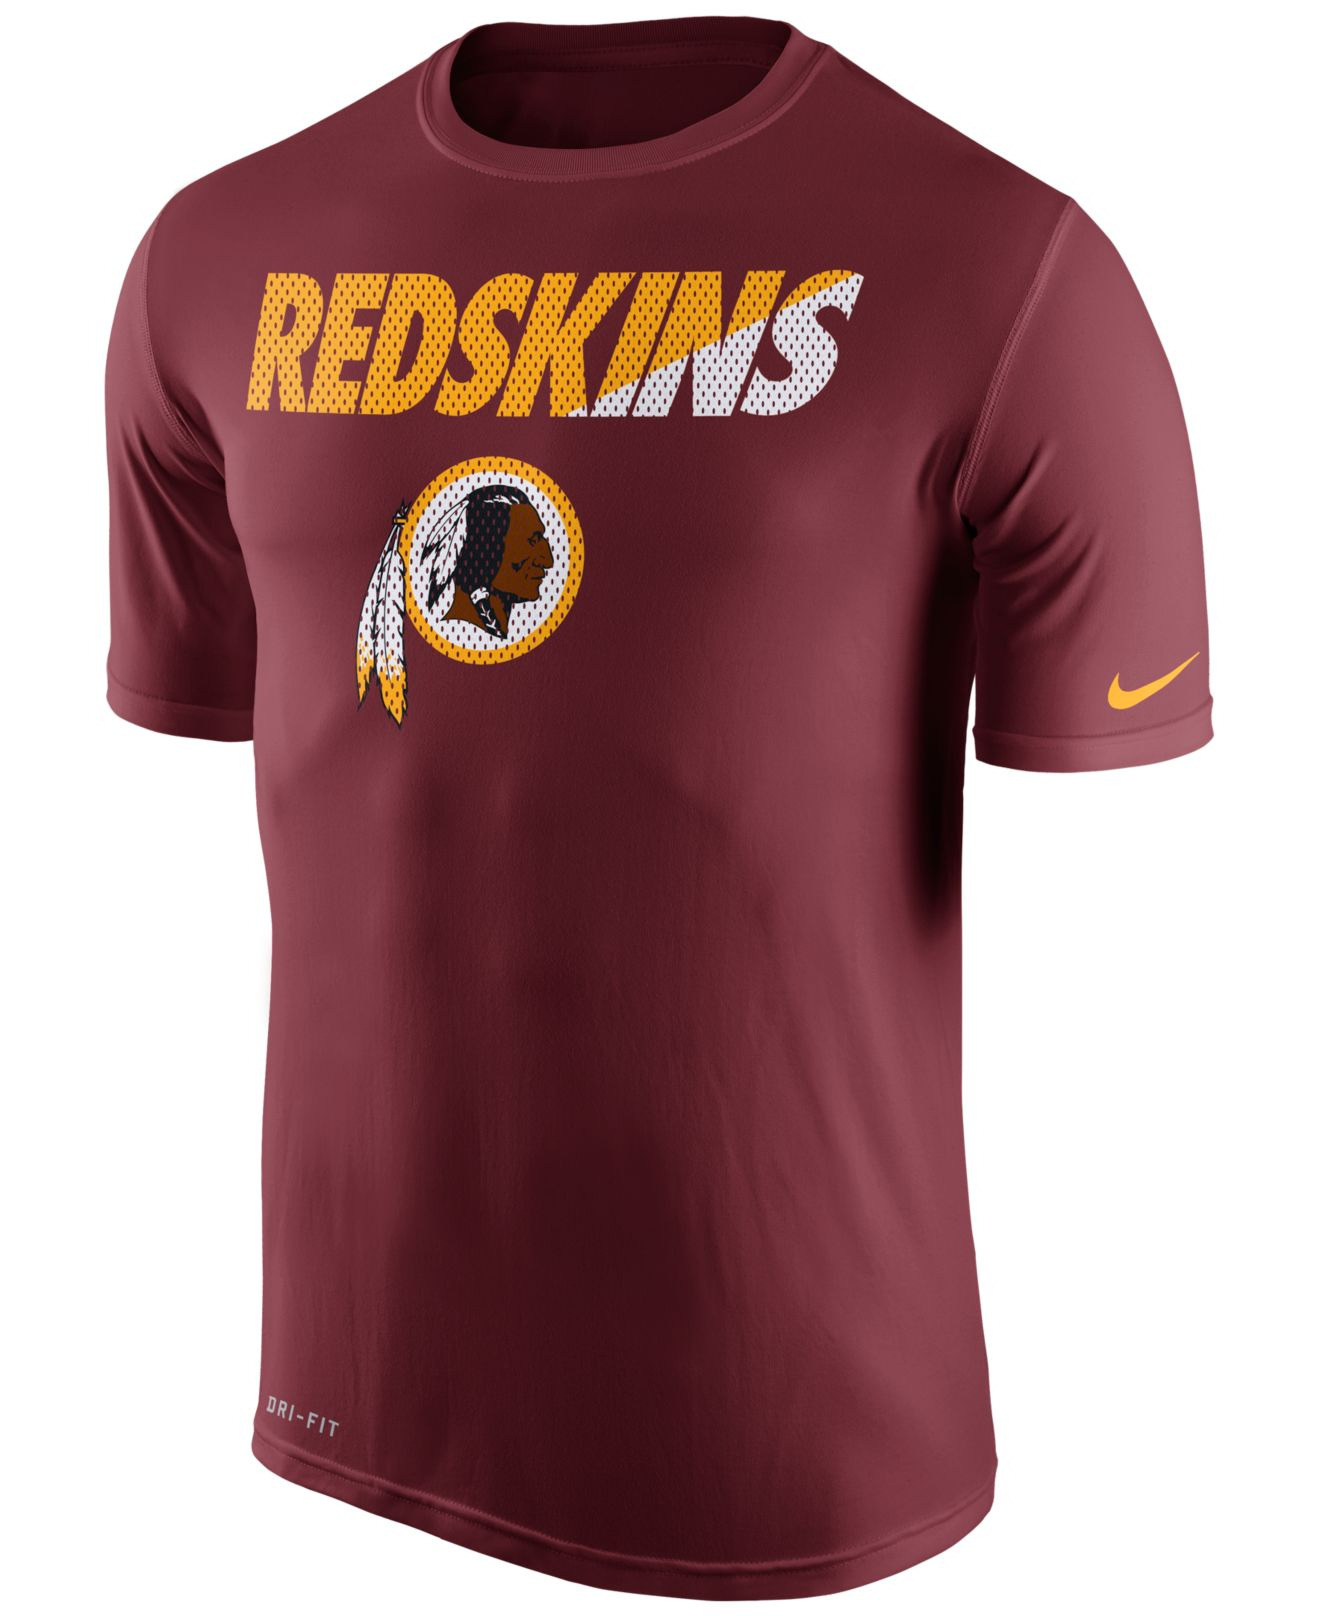 Nike Men's Washington Redskins Dri-fit Practice T-shirt for Men